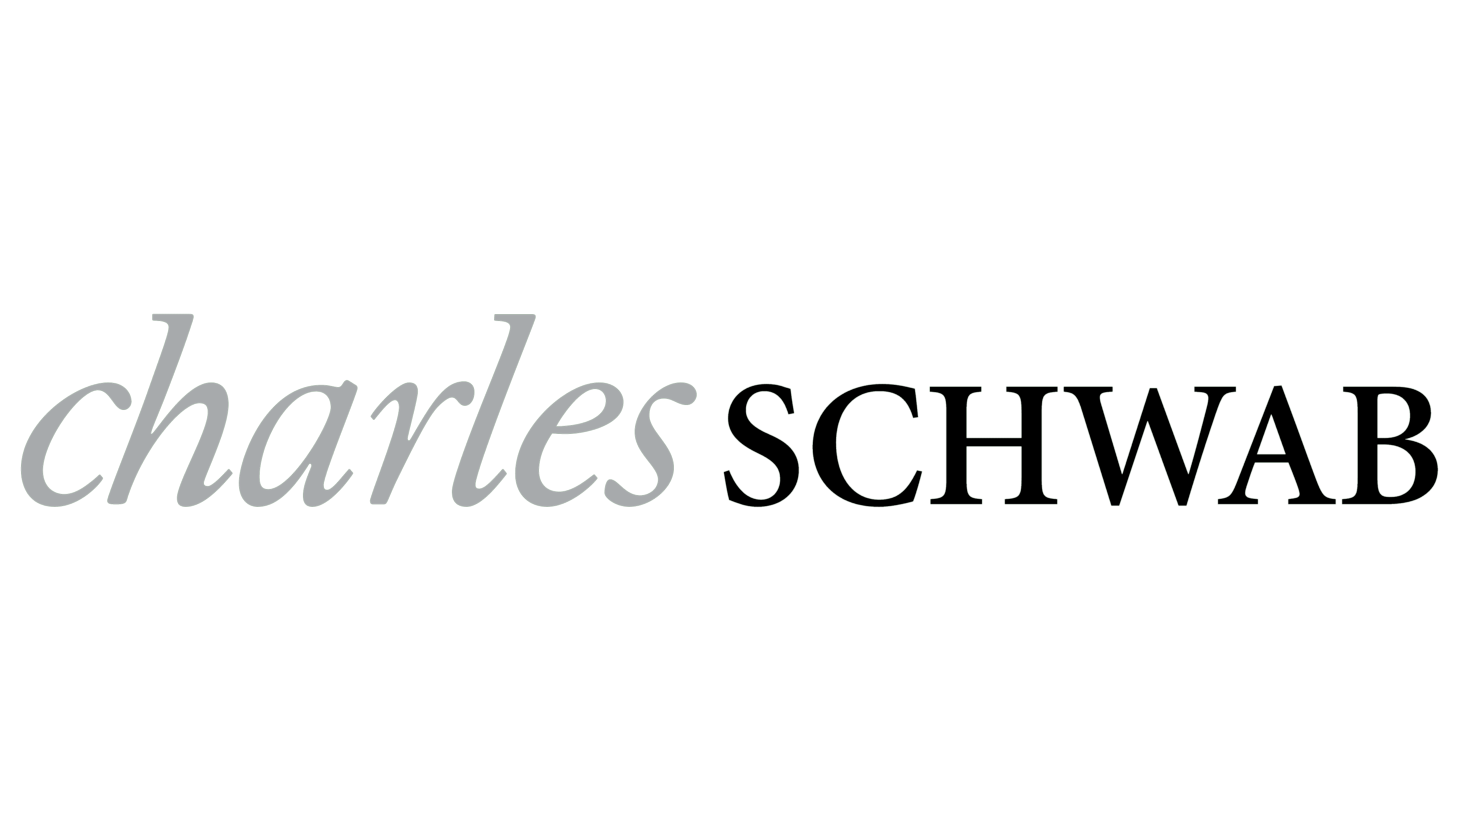 Charles schwab sign 2001 present